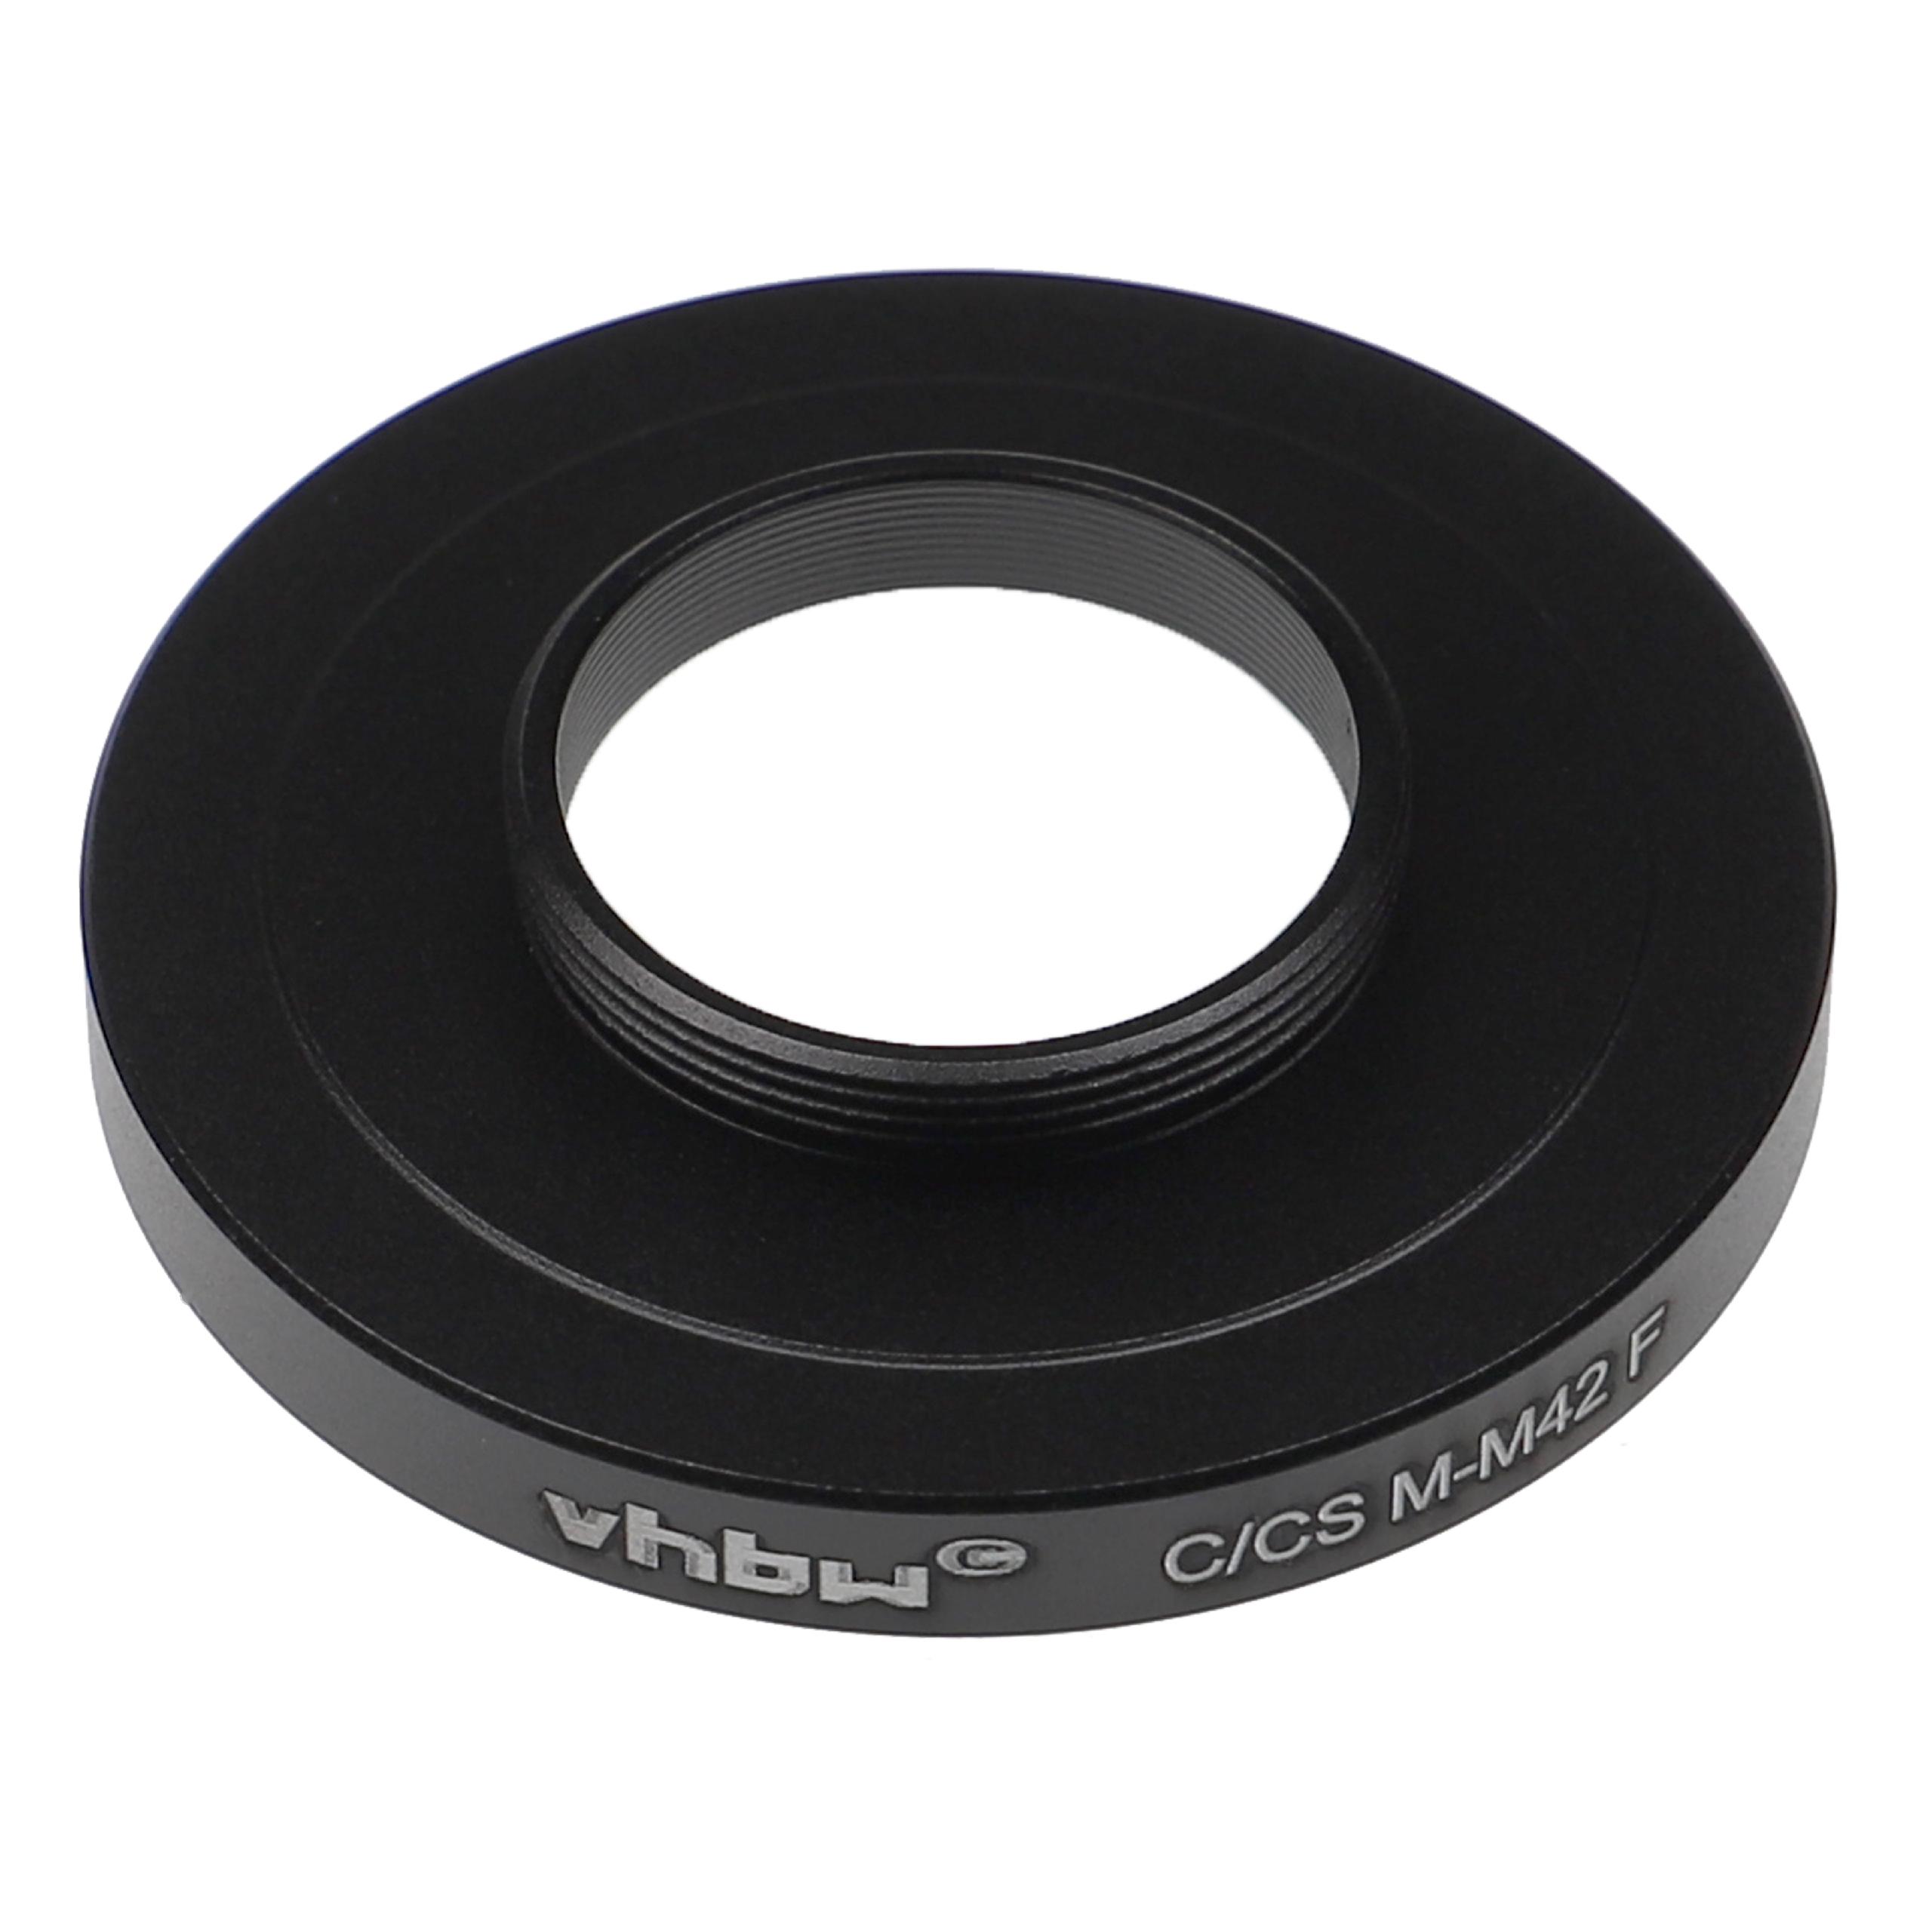 Pierścień pośredni makro do aparatu kamer M42 x 0.75 C/CS-Mount 